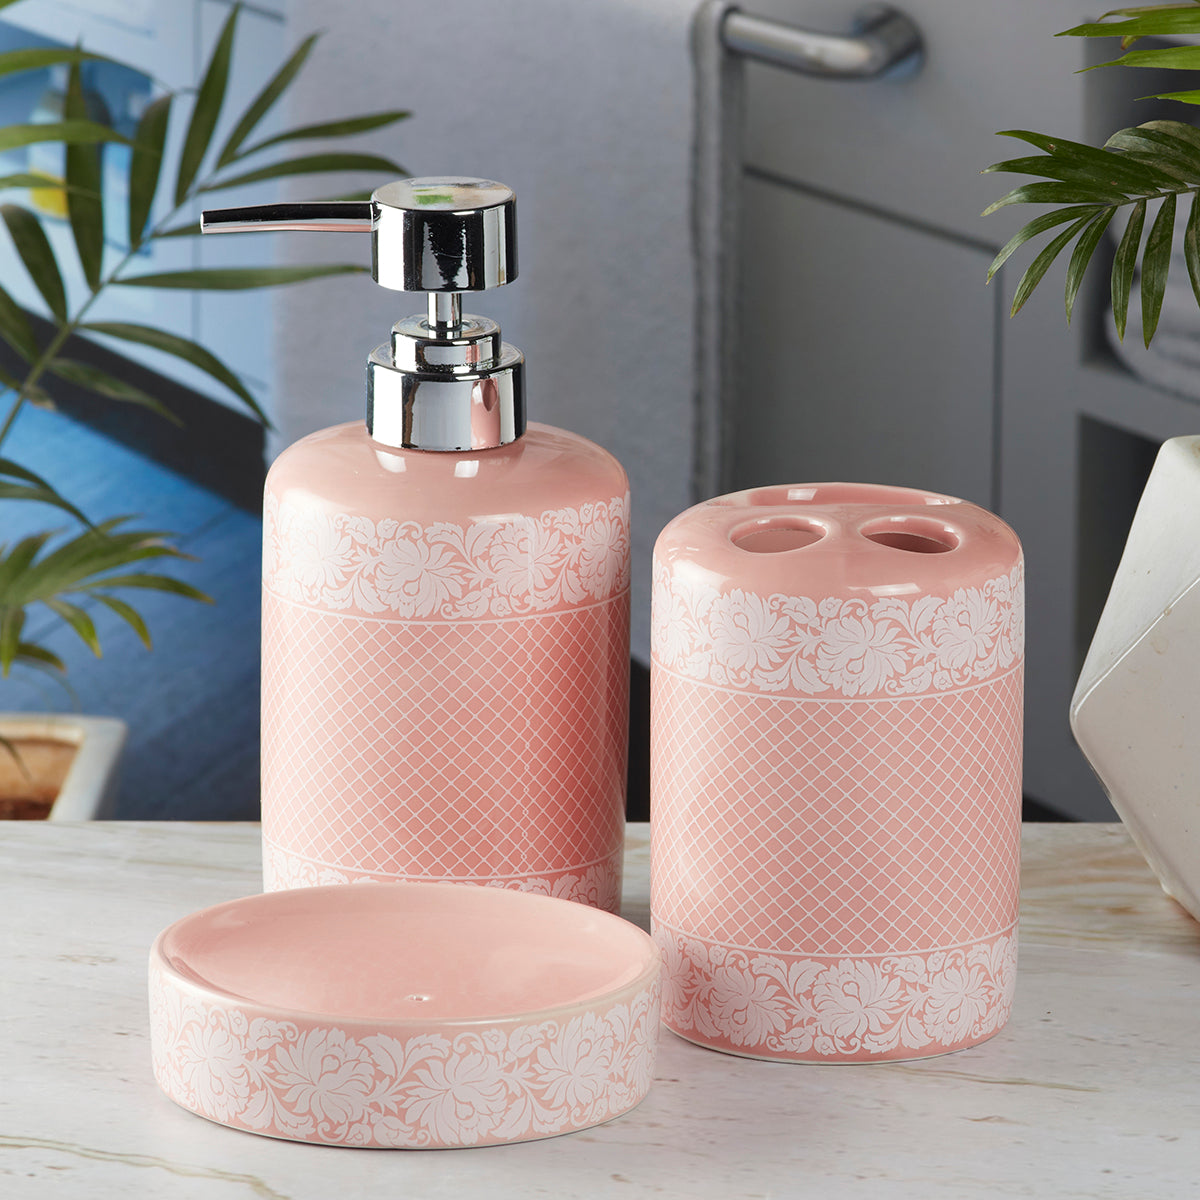 Ceramic Bathroom Accessories Set of 3 Bath Set with Soap Dispenser (5766)